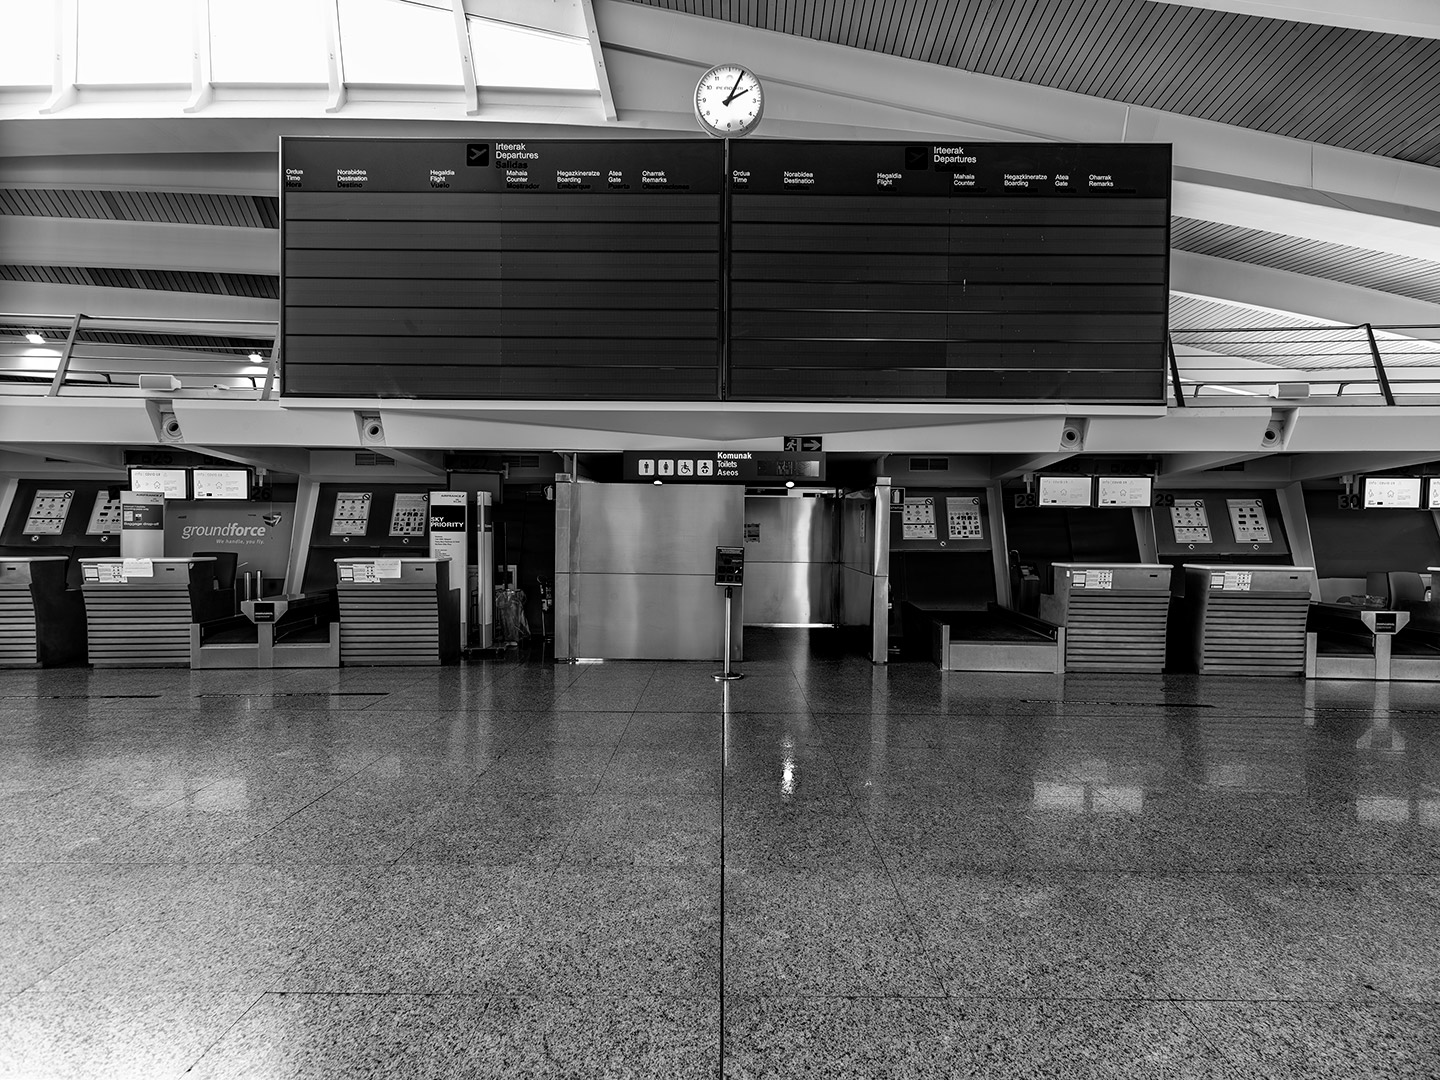 Bilbao Airport 04-11-2020 1:07 pm </br>(Aeropuerto de Bilbao, 11-04-2020 13:07 h) - Direct printing on Dibond